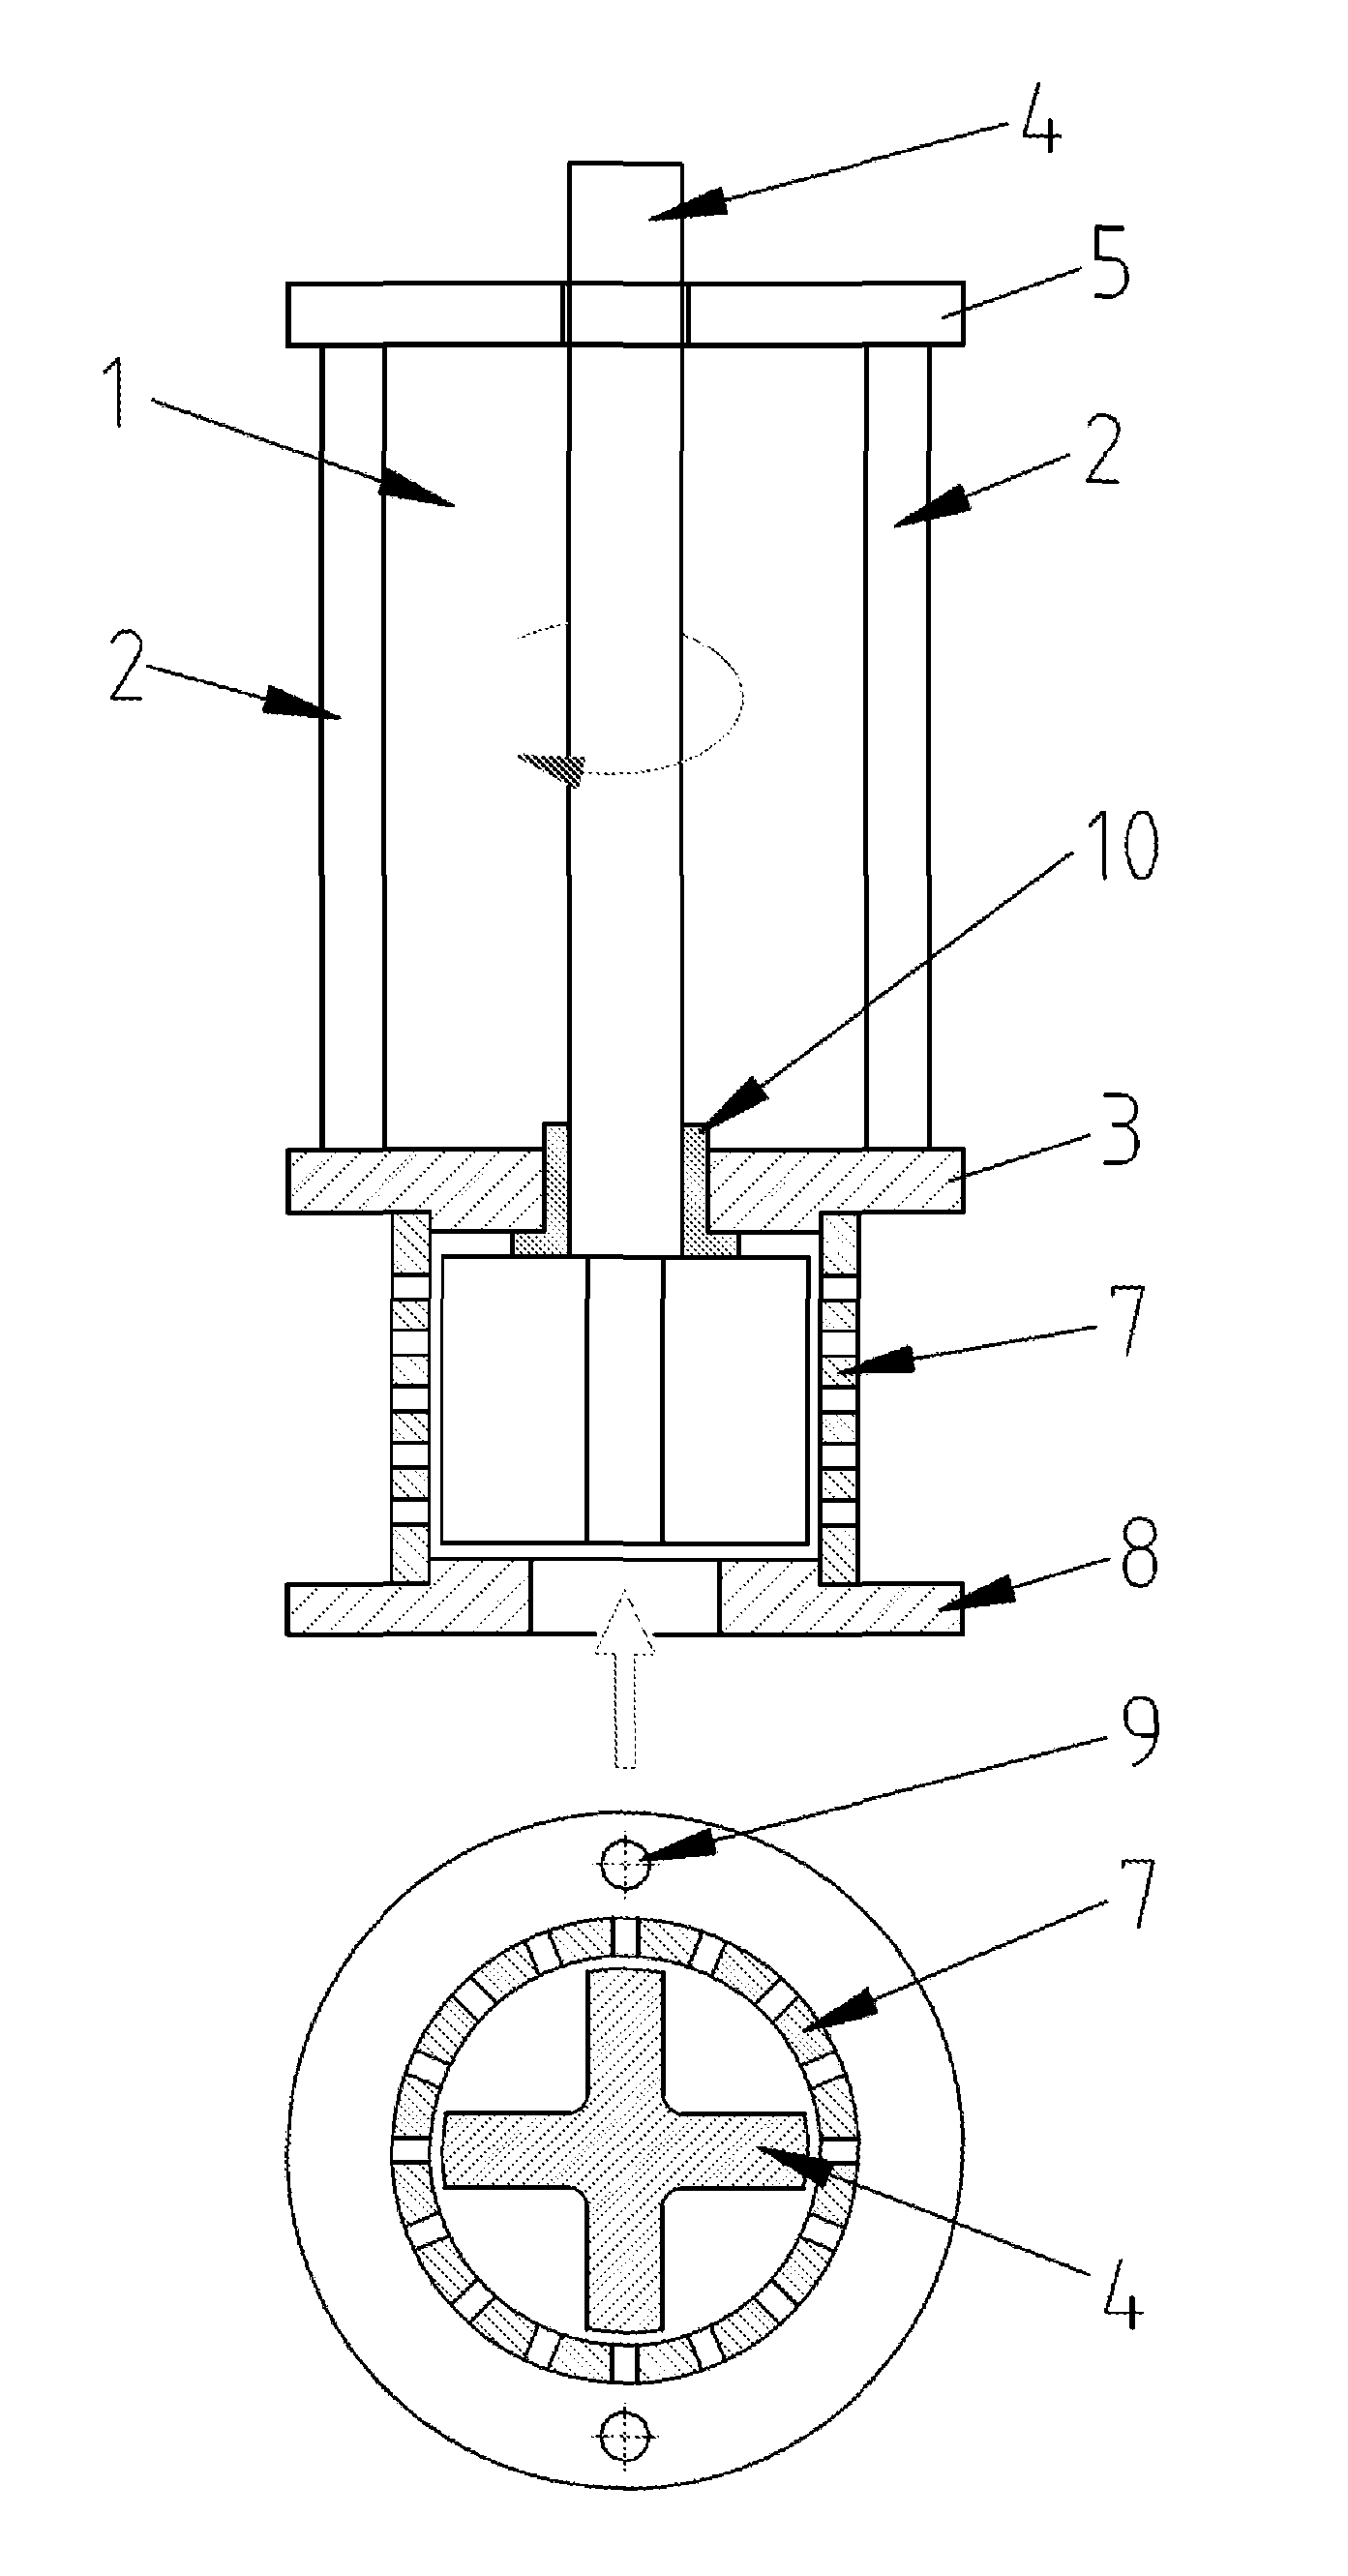 Apparatus and method for liquid metals treatment